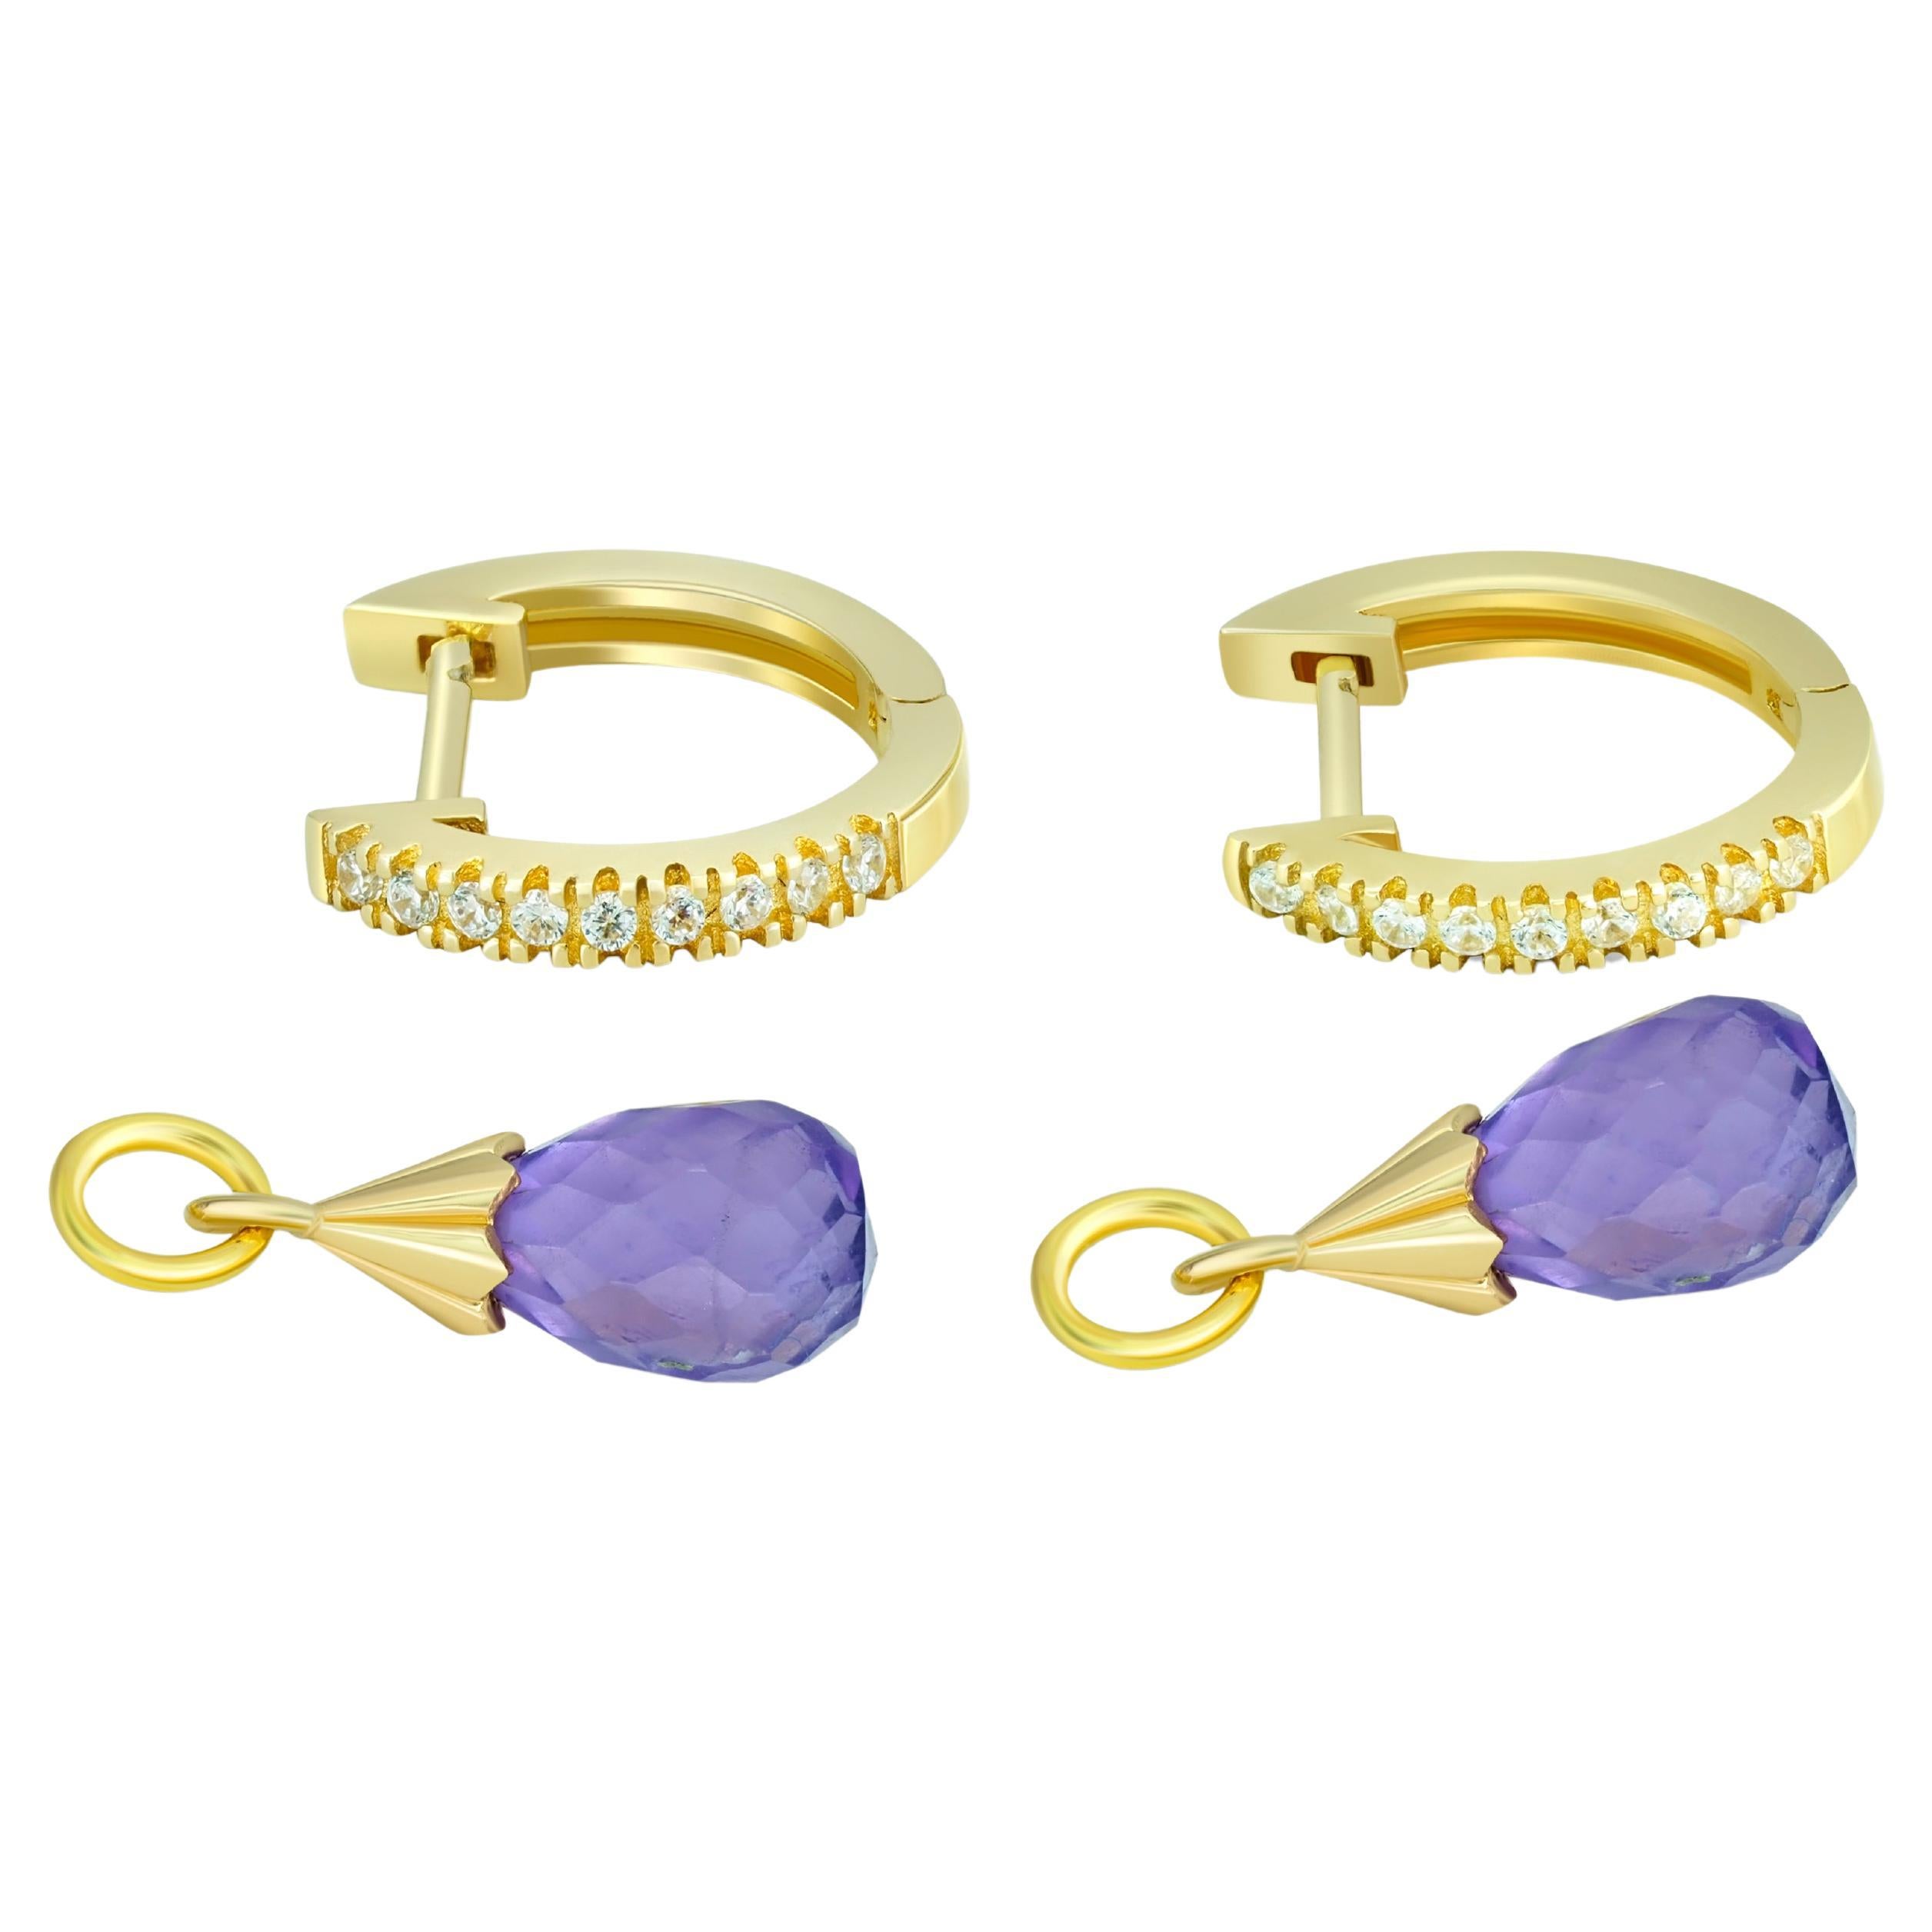 Diamond Hoop Earrings and Amethyst Briolette Charms in 14k Gold. 